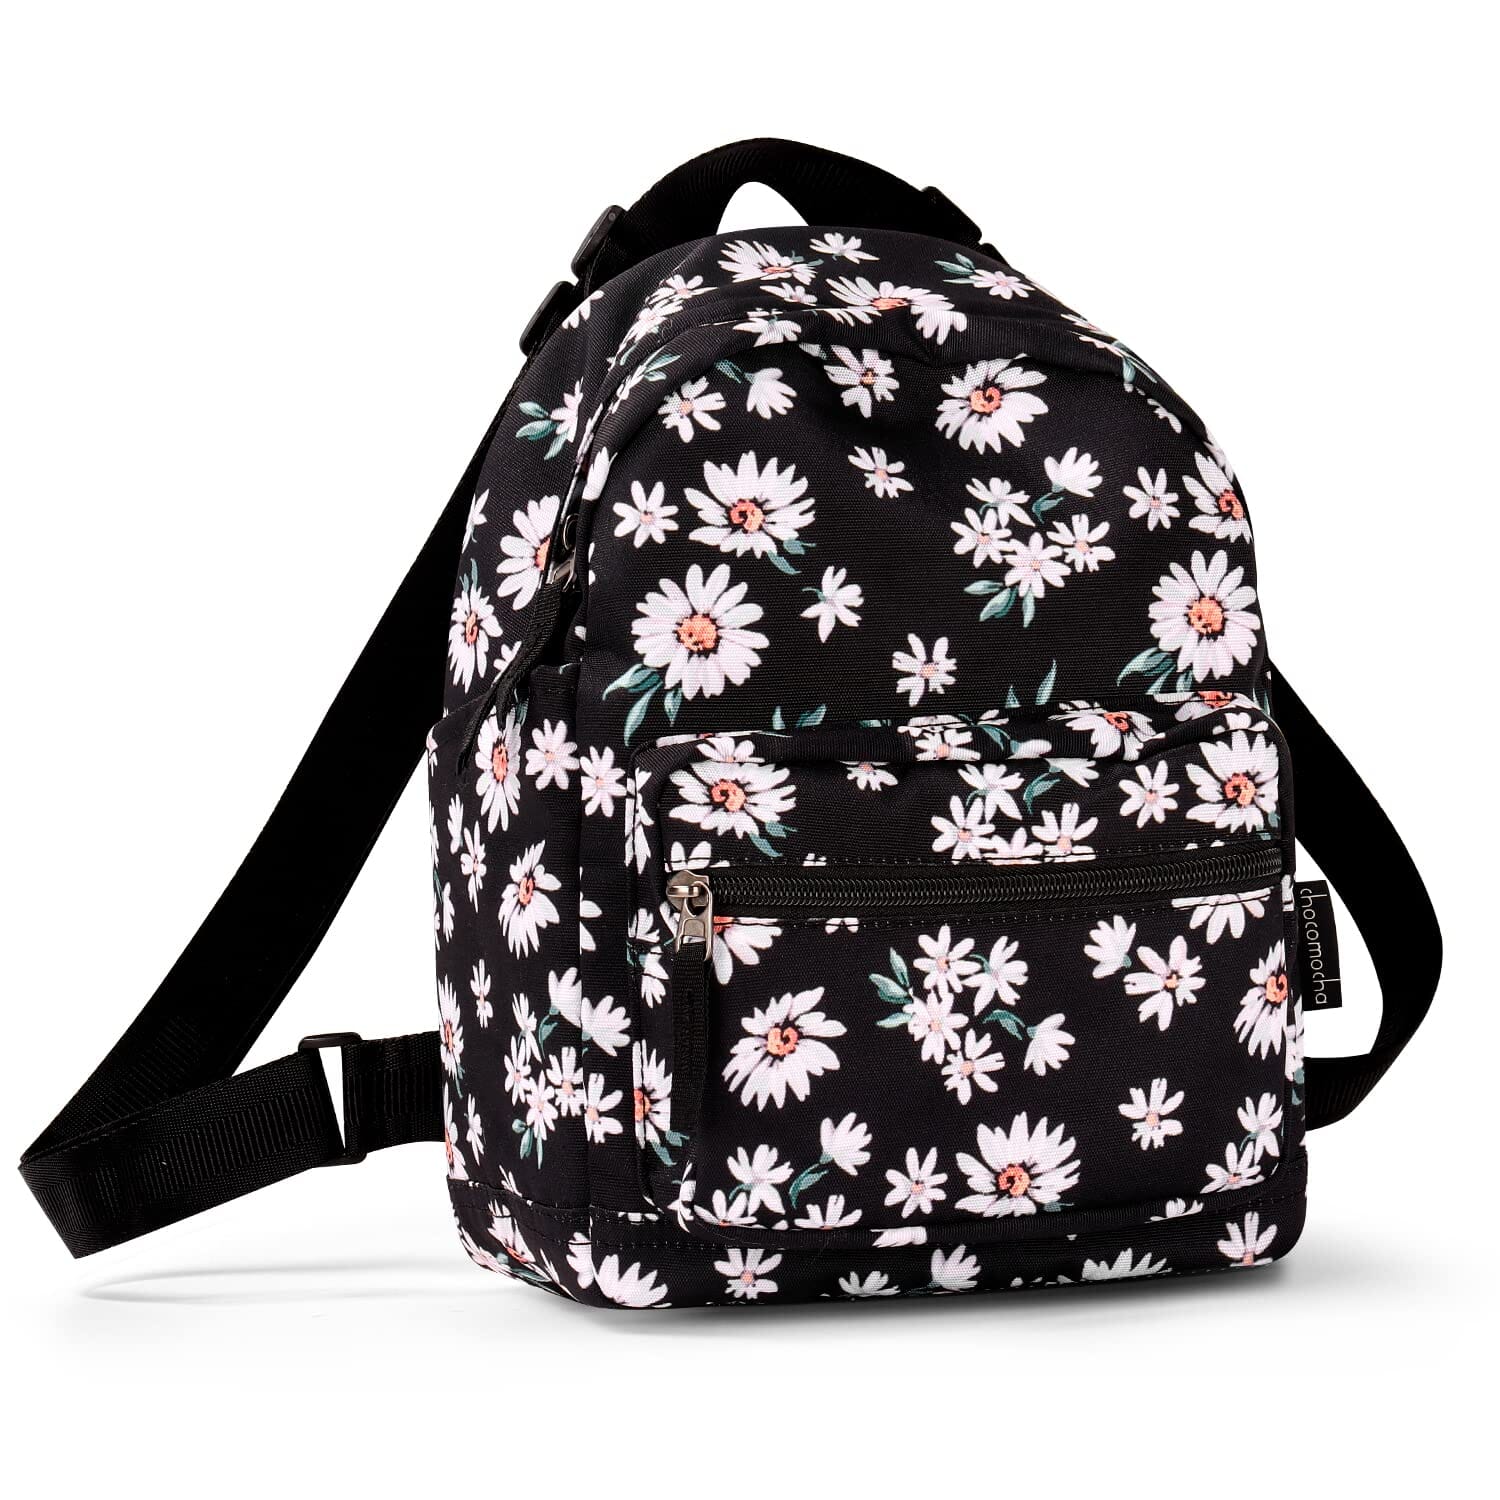 Choco Mocha Black Small Backpack for Girls and Women Teen, Kids Mini Backpack Purse Cute Little Girls Backpack School Travel Bookbag, Daisy chocomochakids 